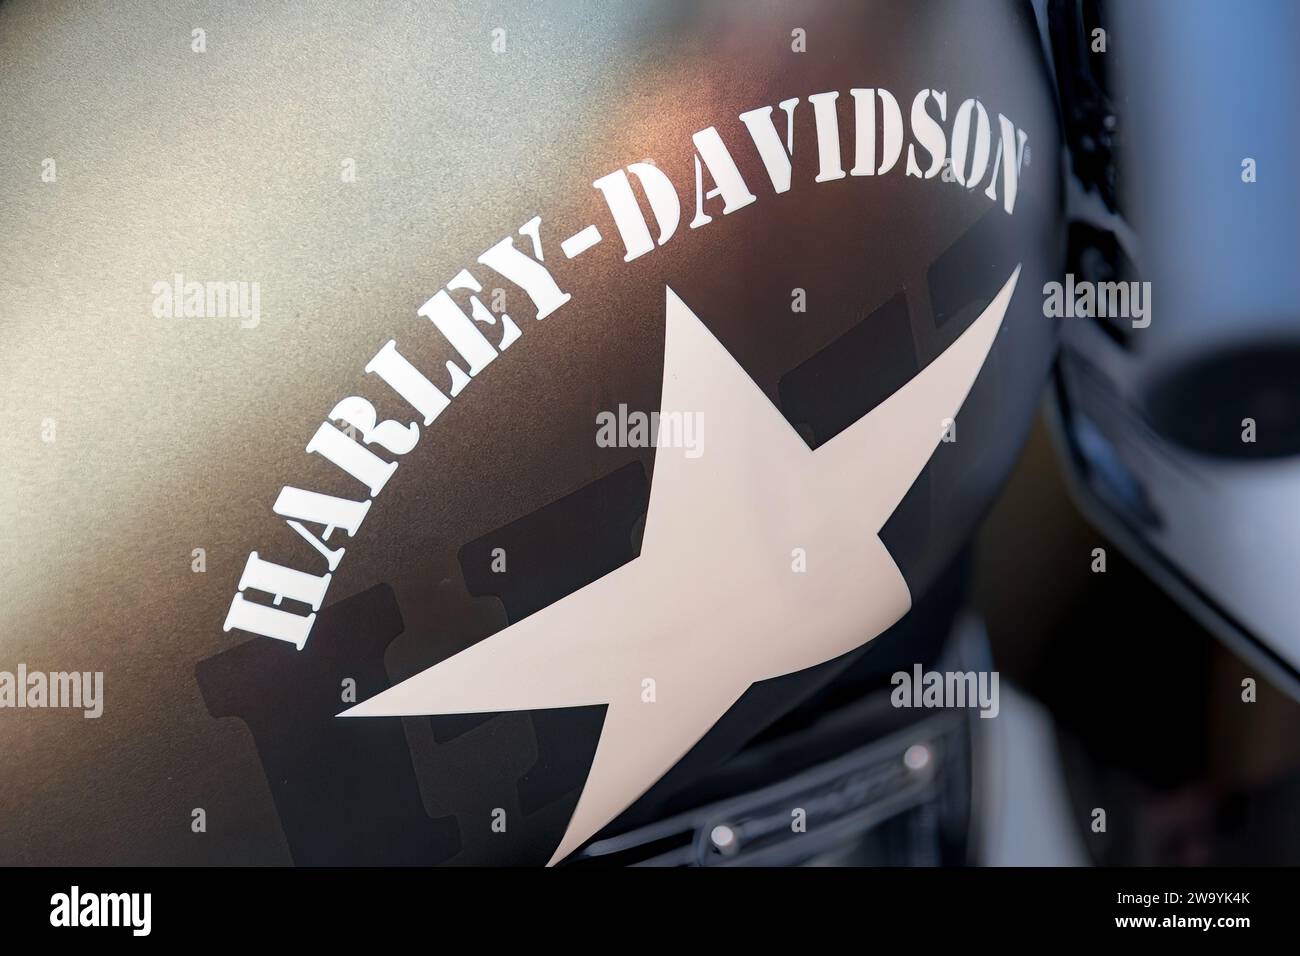 Toronto, Ontario, Canada-January 6, 2020: Harley Davidson logo in a Motorcycle's gas tank. Stock Photo